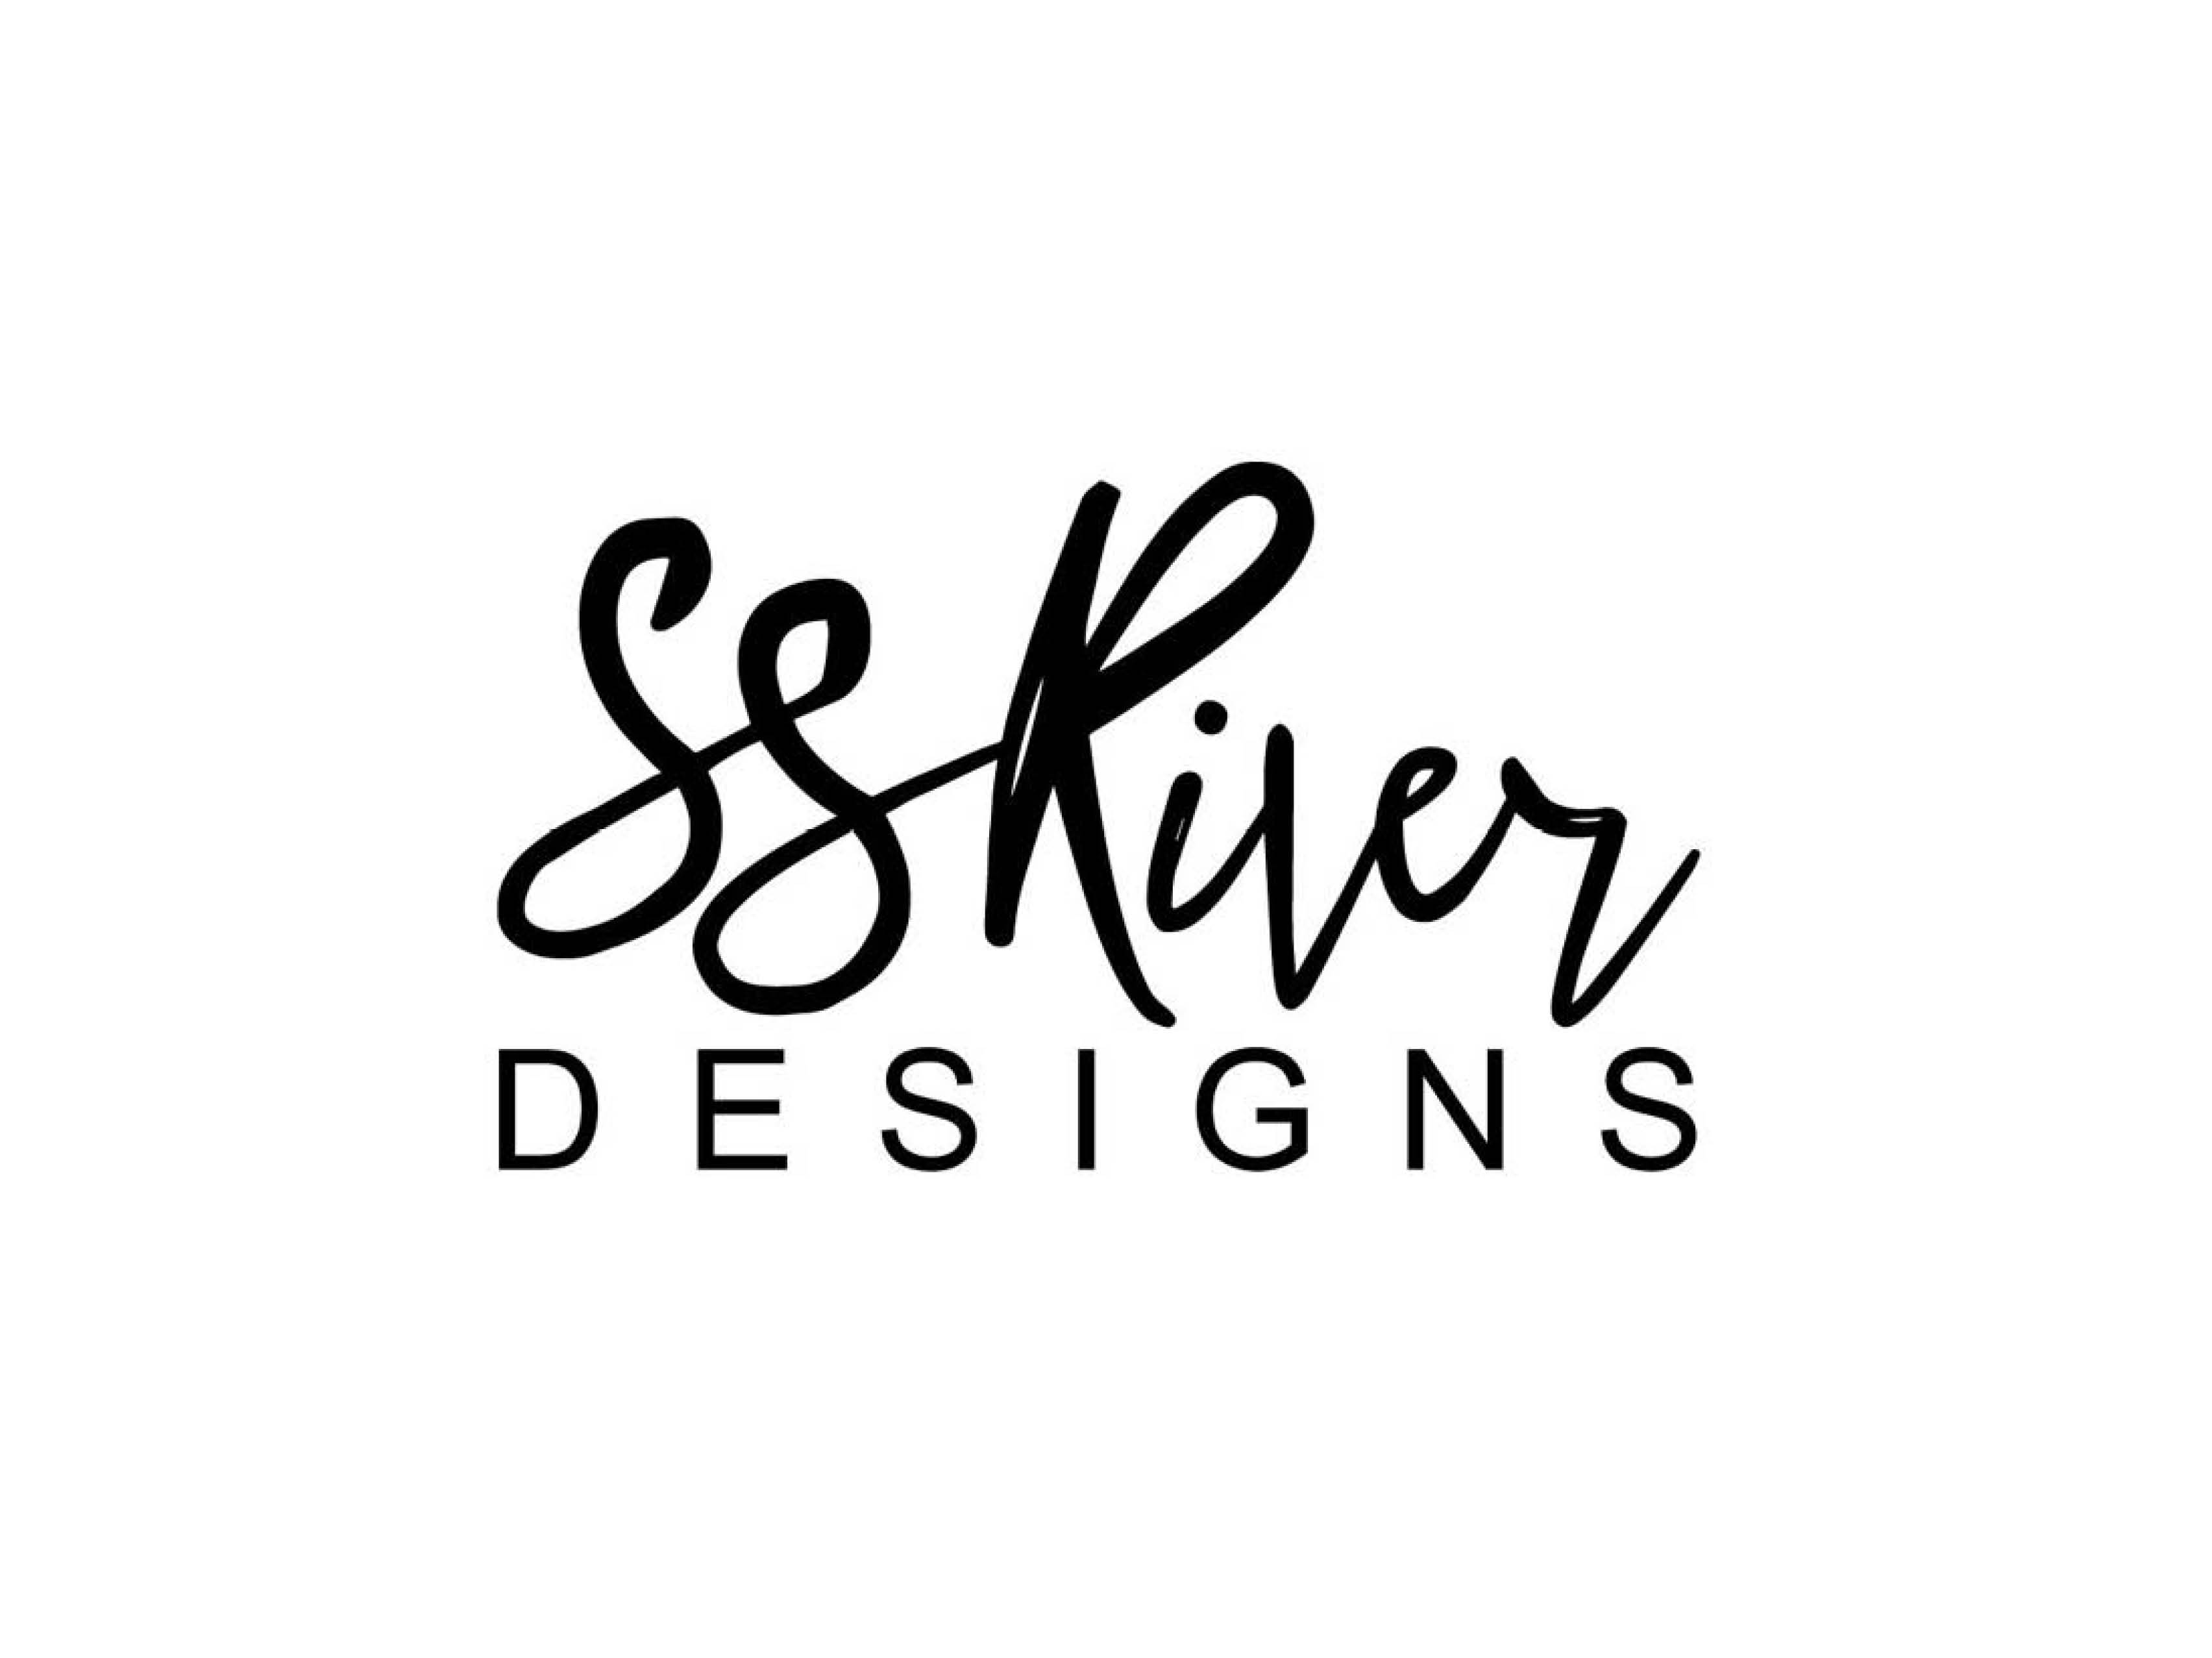 SS River Designs logo